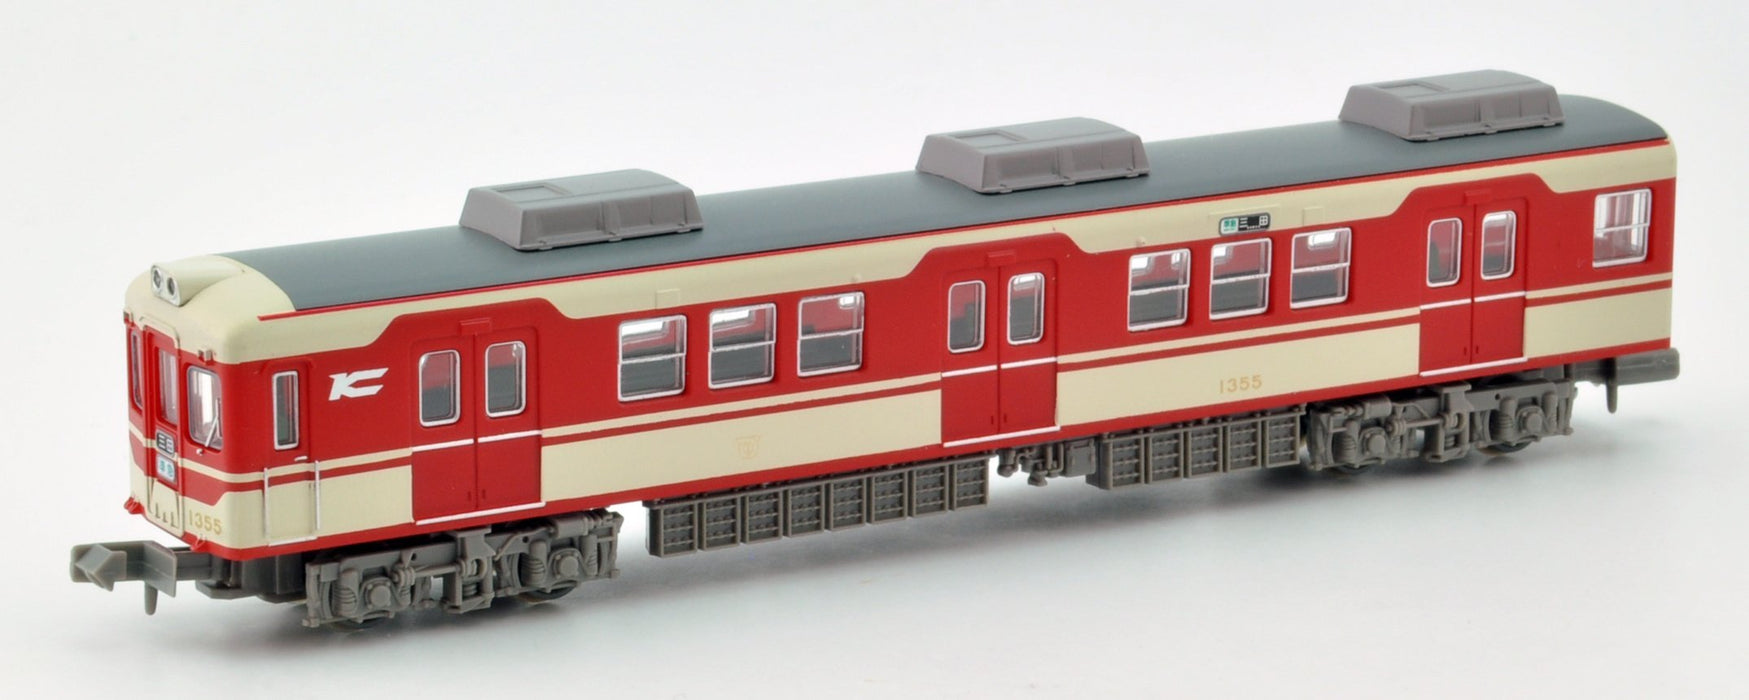 TOMYTEC Kobe Electric Railway De Type 1350 4 Cars Set N Scale